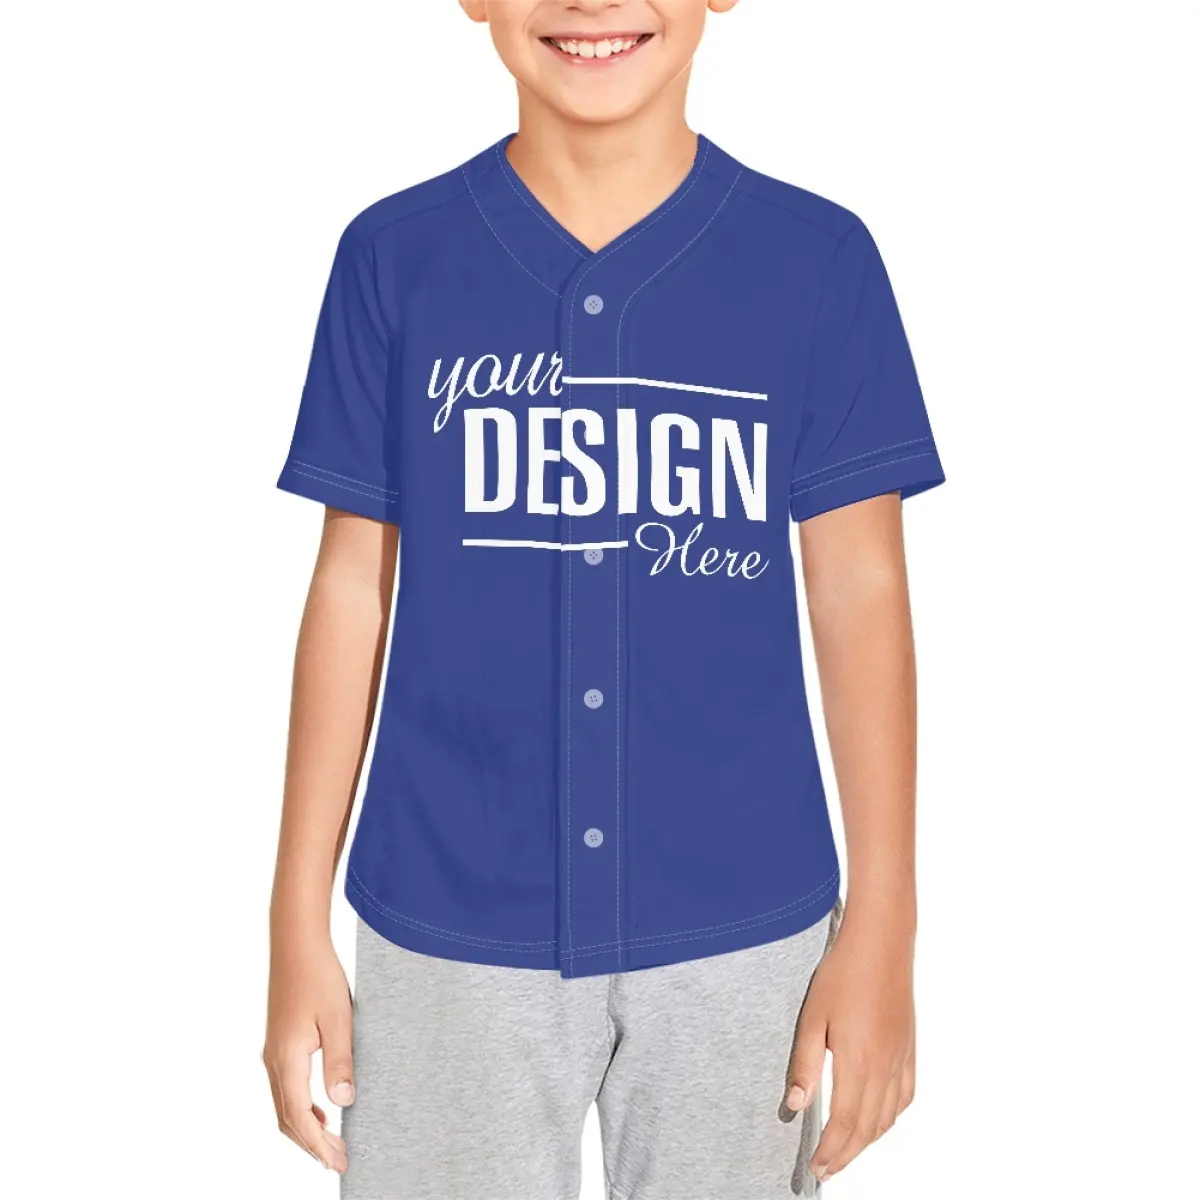 Wholesale Kids Baseball Jersey Dropshipping Clothes Custom Design Baseball Shirts Children Baseball Softball Wear Uniform Unisex